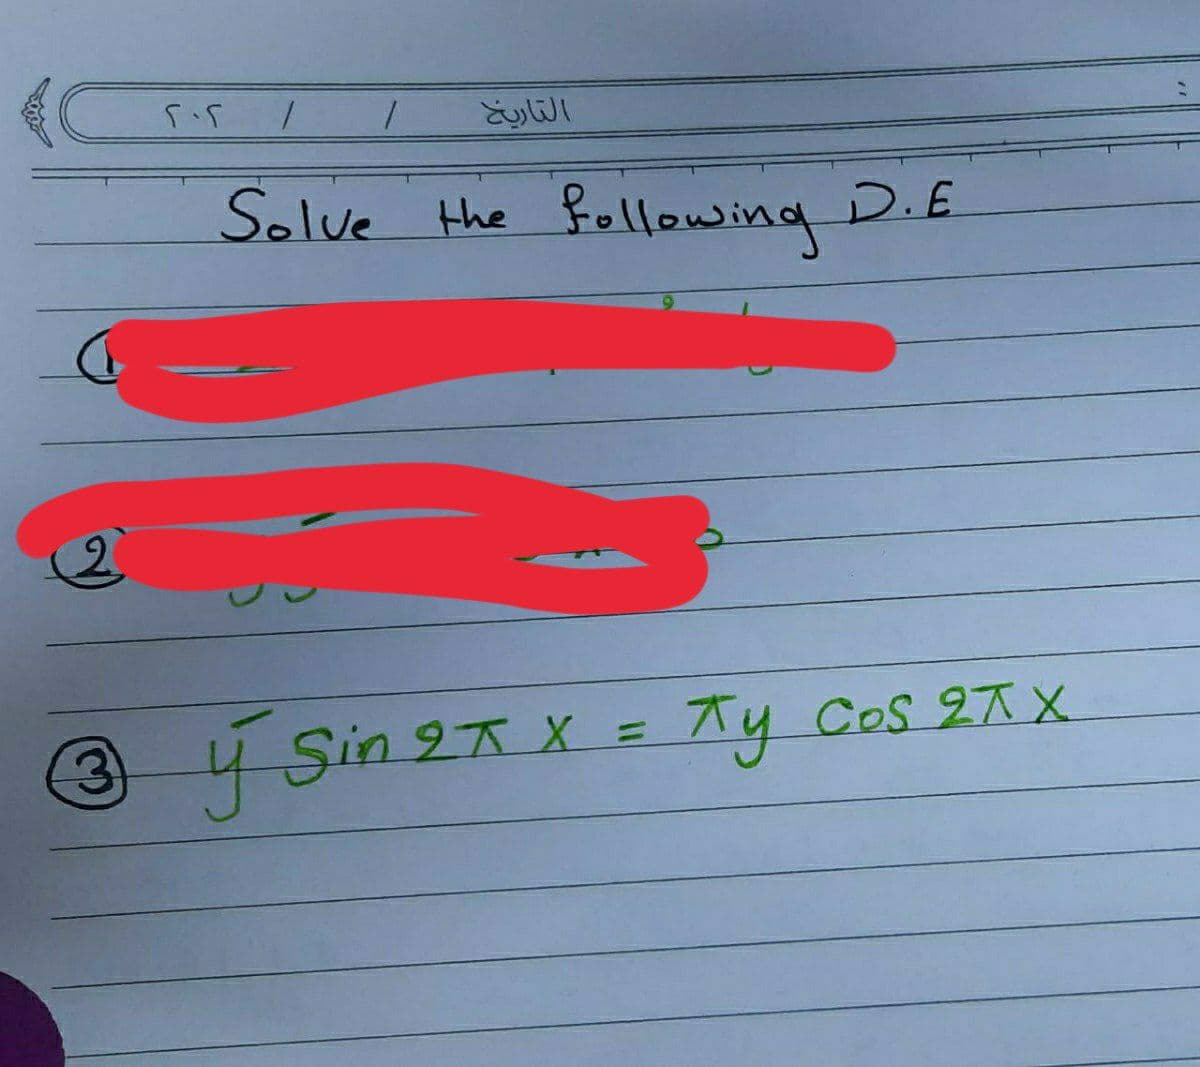 التاريخ
Solve the
Bellowing
D.E
3
Sin 97 X = Ty
Cos 27 X
